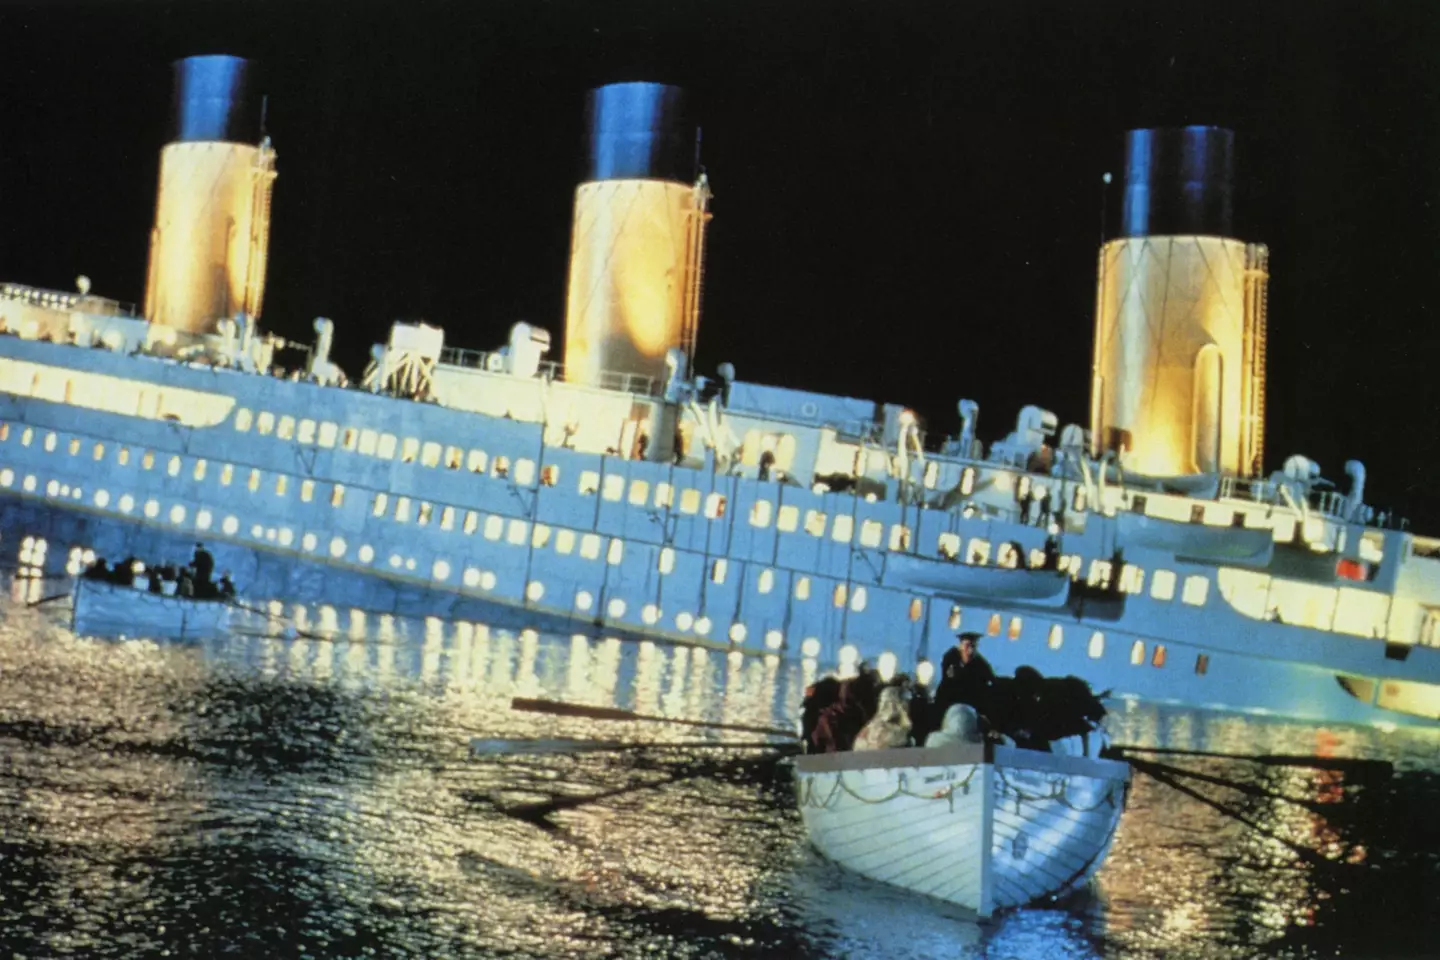 Come on James, Titanic was pretty big, wasn't it?